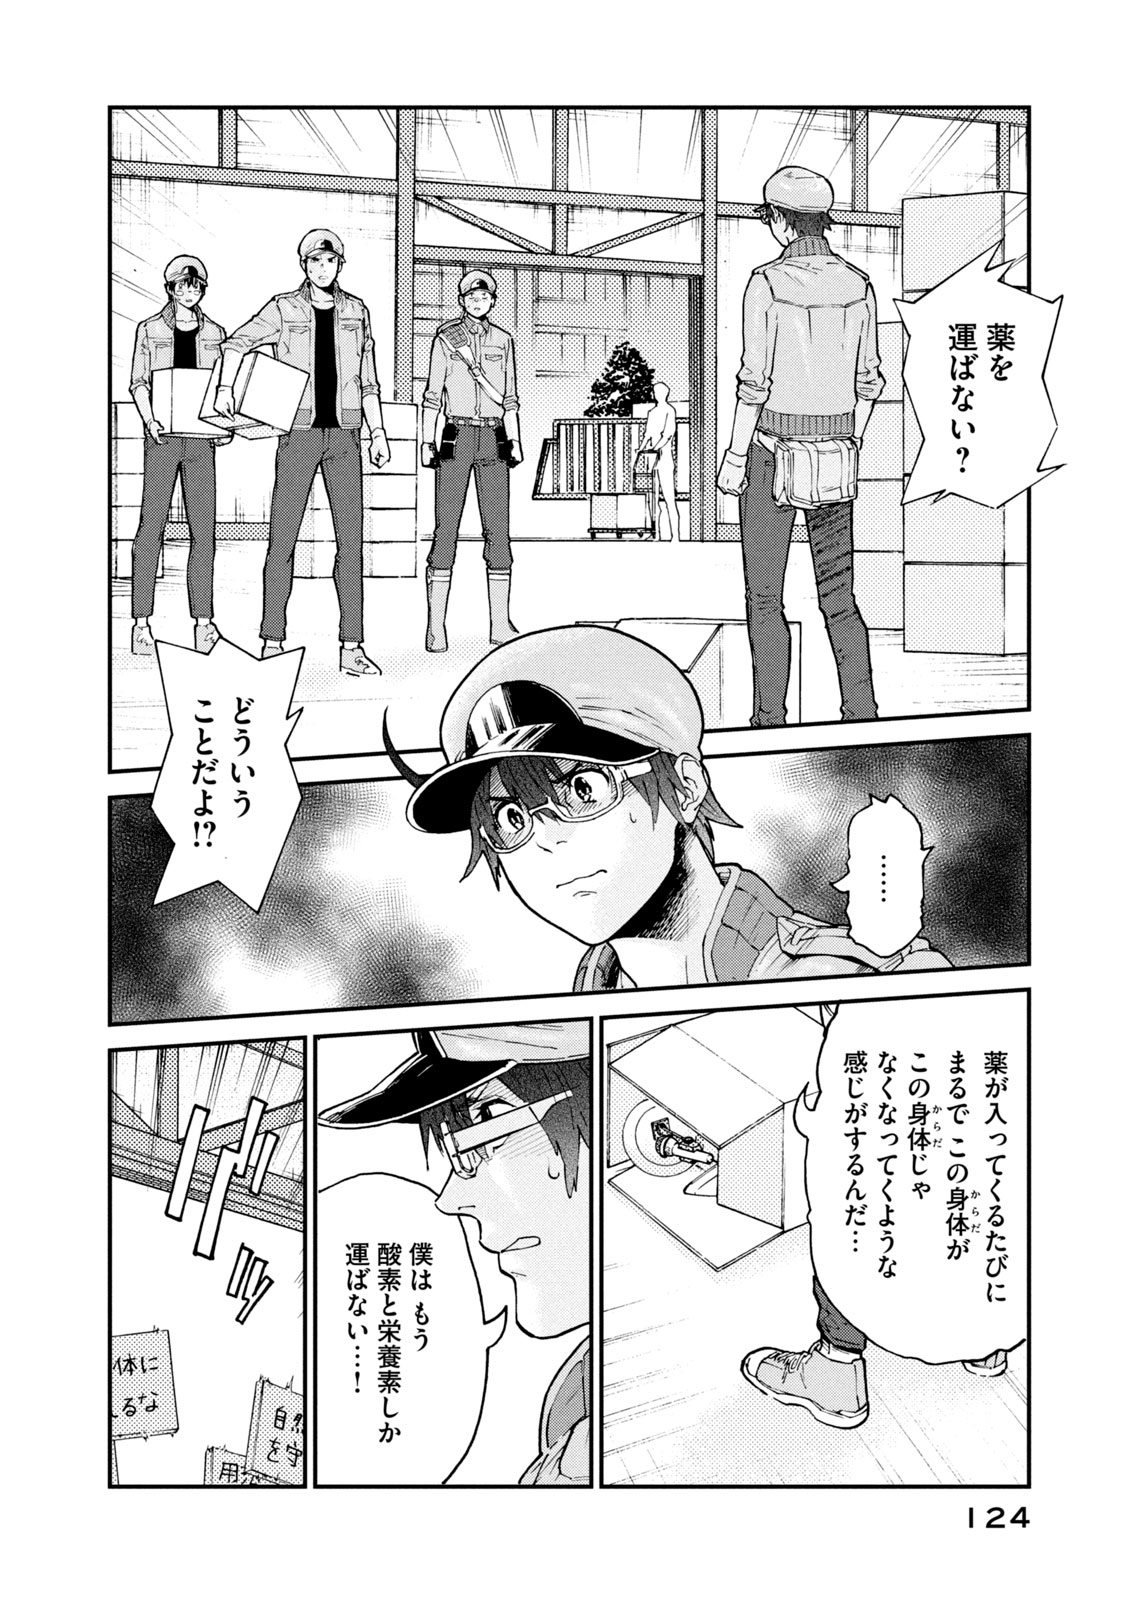 Hataraku Saibou BLACK - Chapter 36 - Page 2